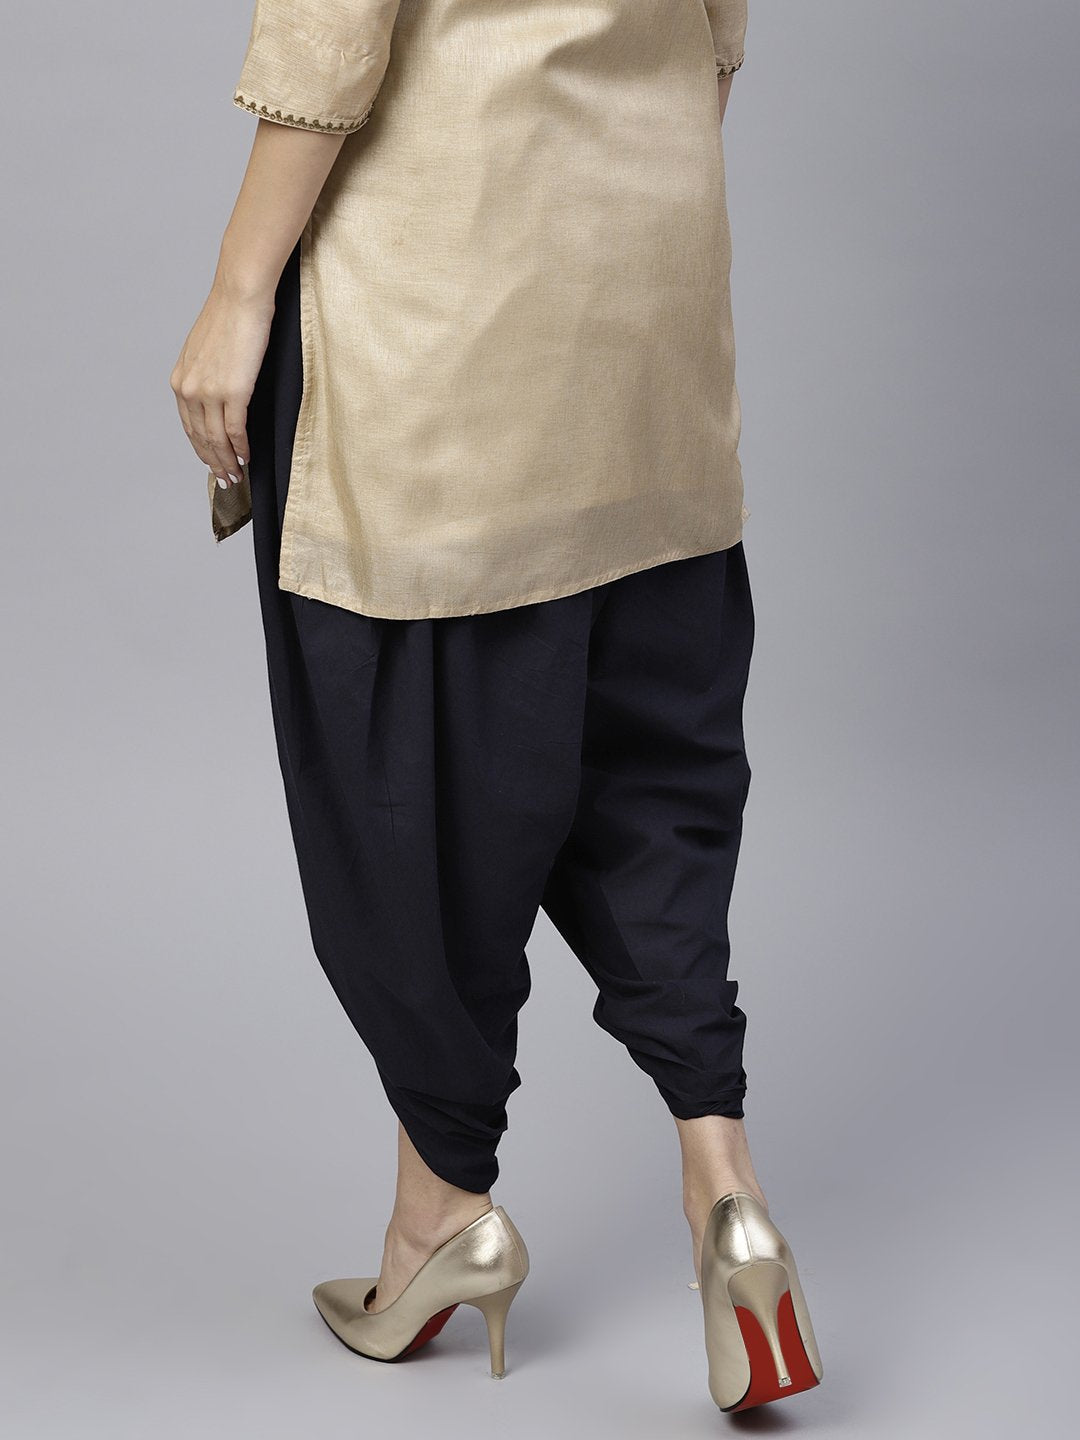 Cotton Yoga Dhoti Pants: Epitome of Comfort | by Udai Soni | Medium